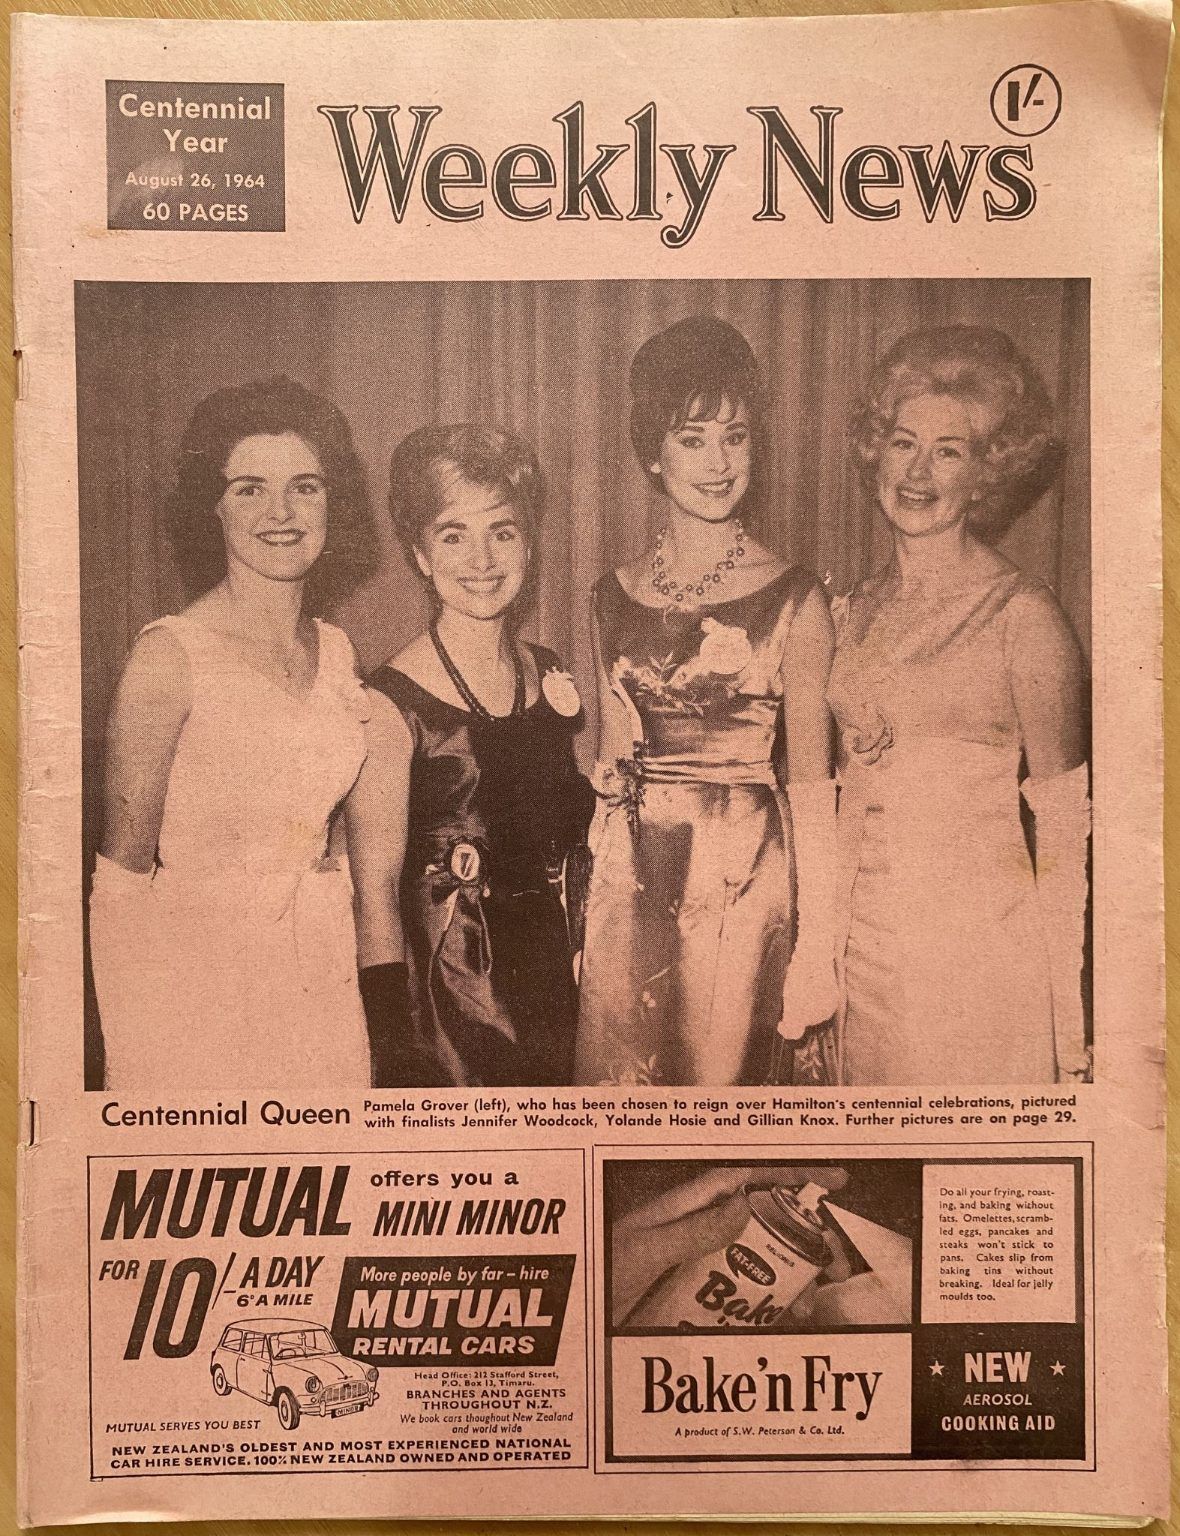 OLD NEWSPAPER: Weekly News, No. 5257, 26 August 1964